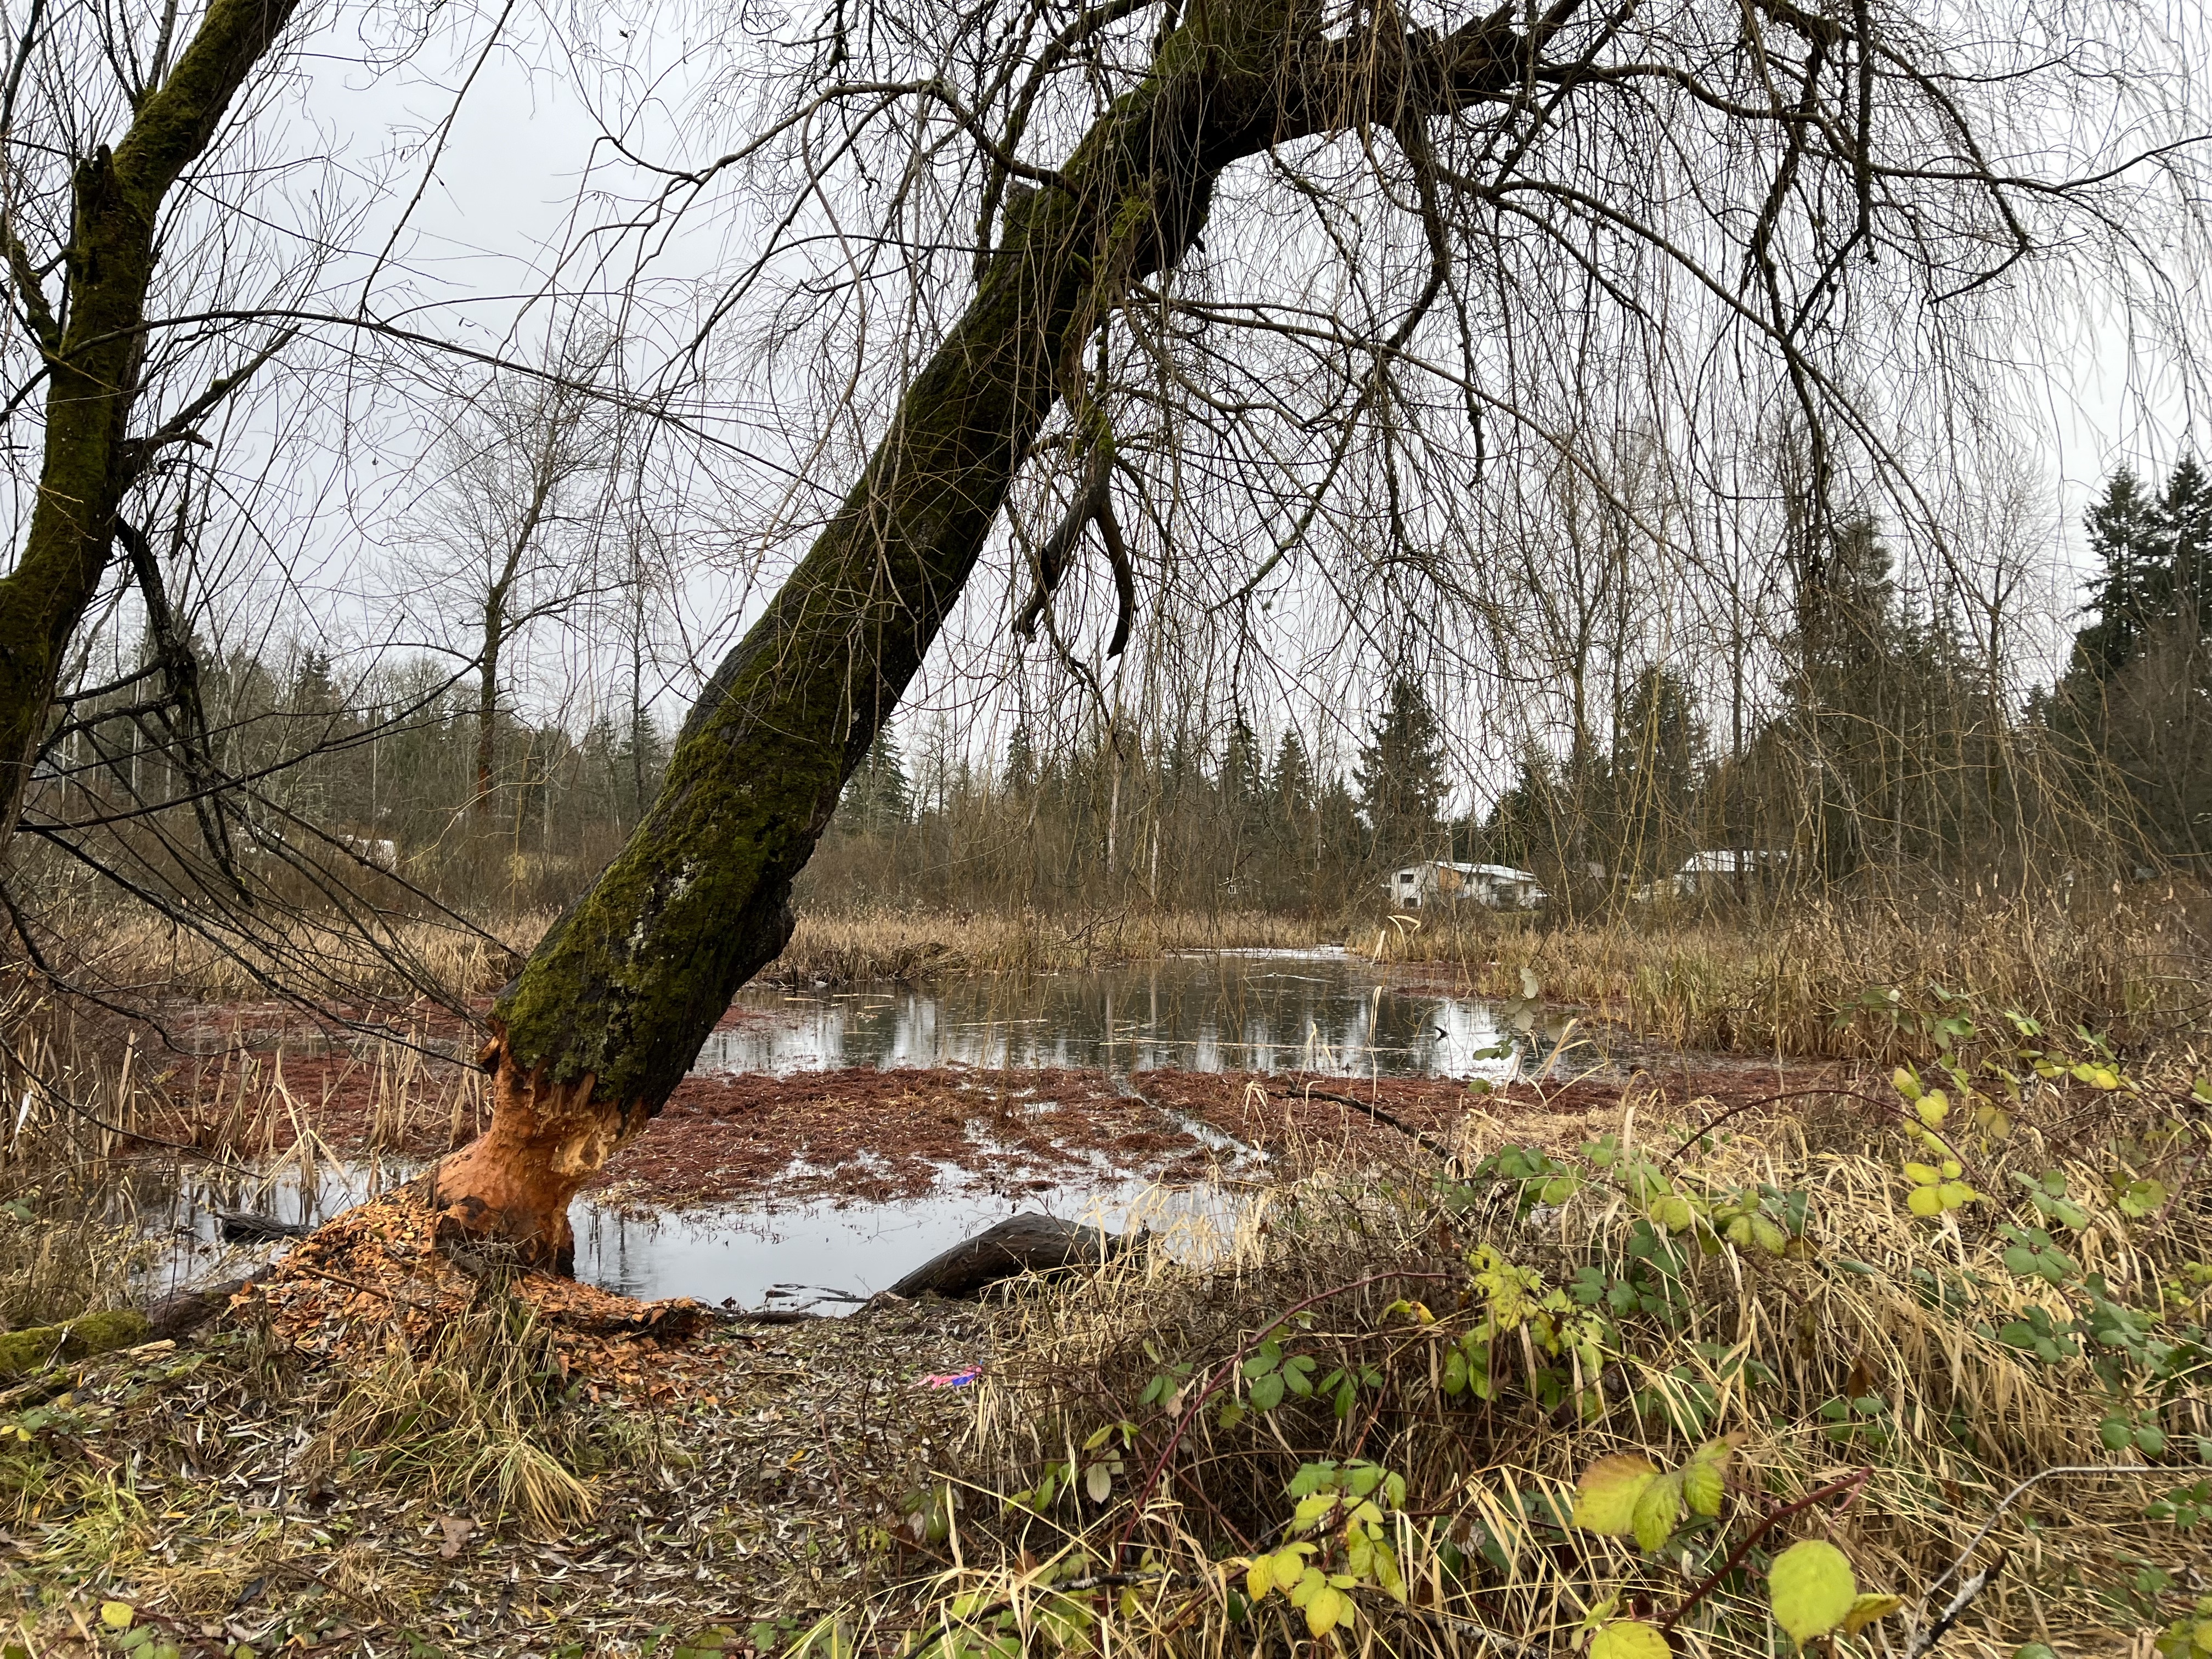 Cemetery Pond wetland in December 2022.